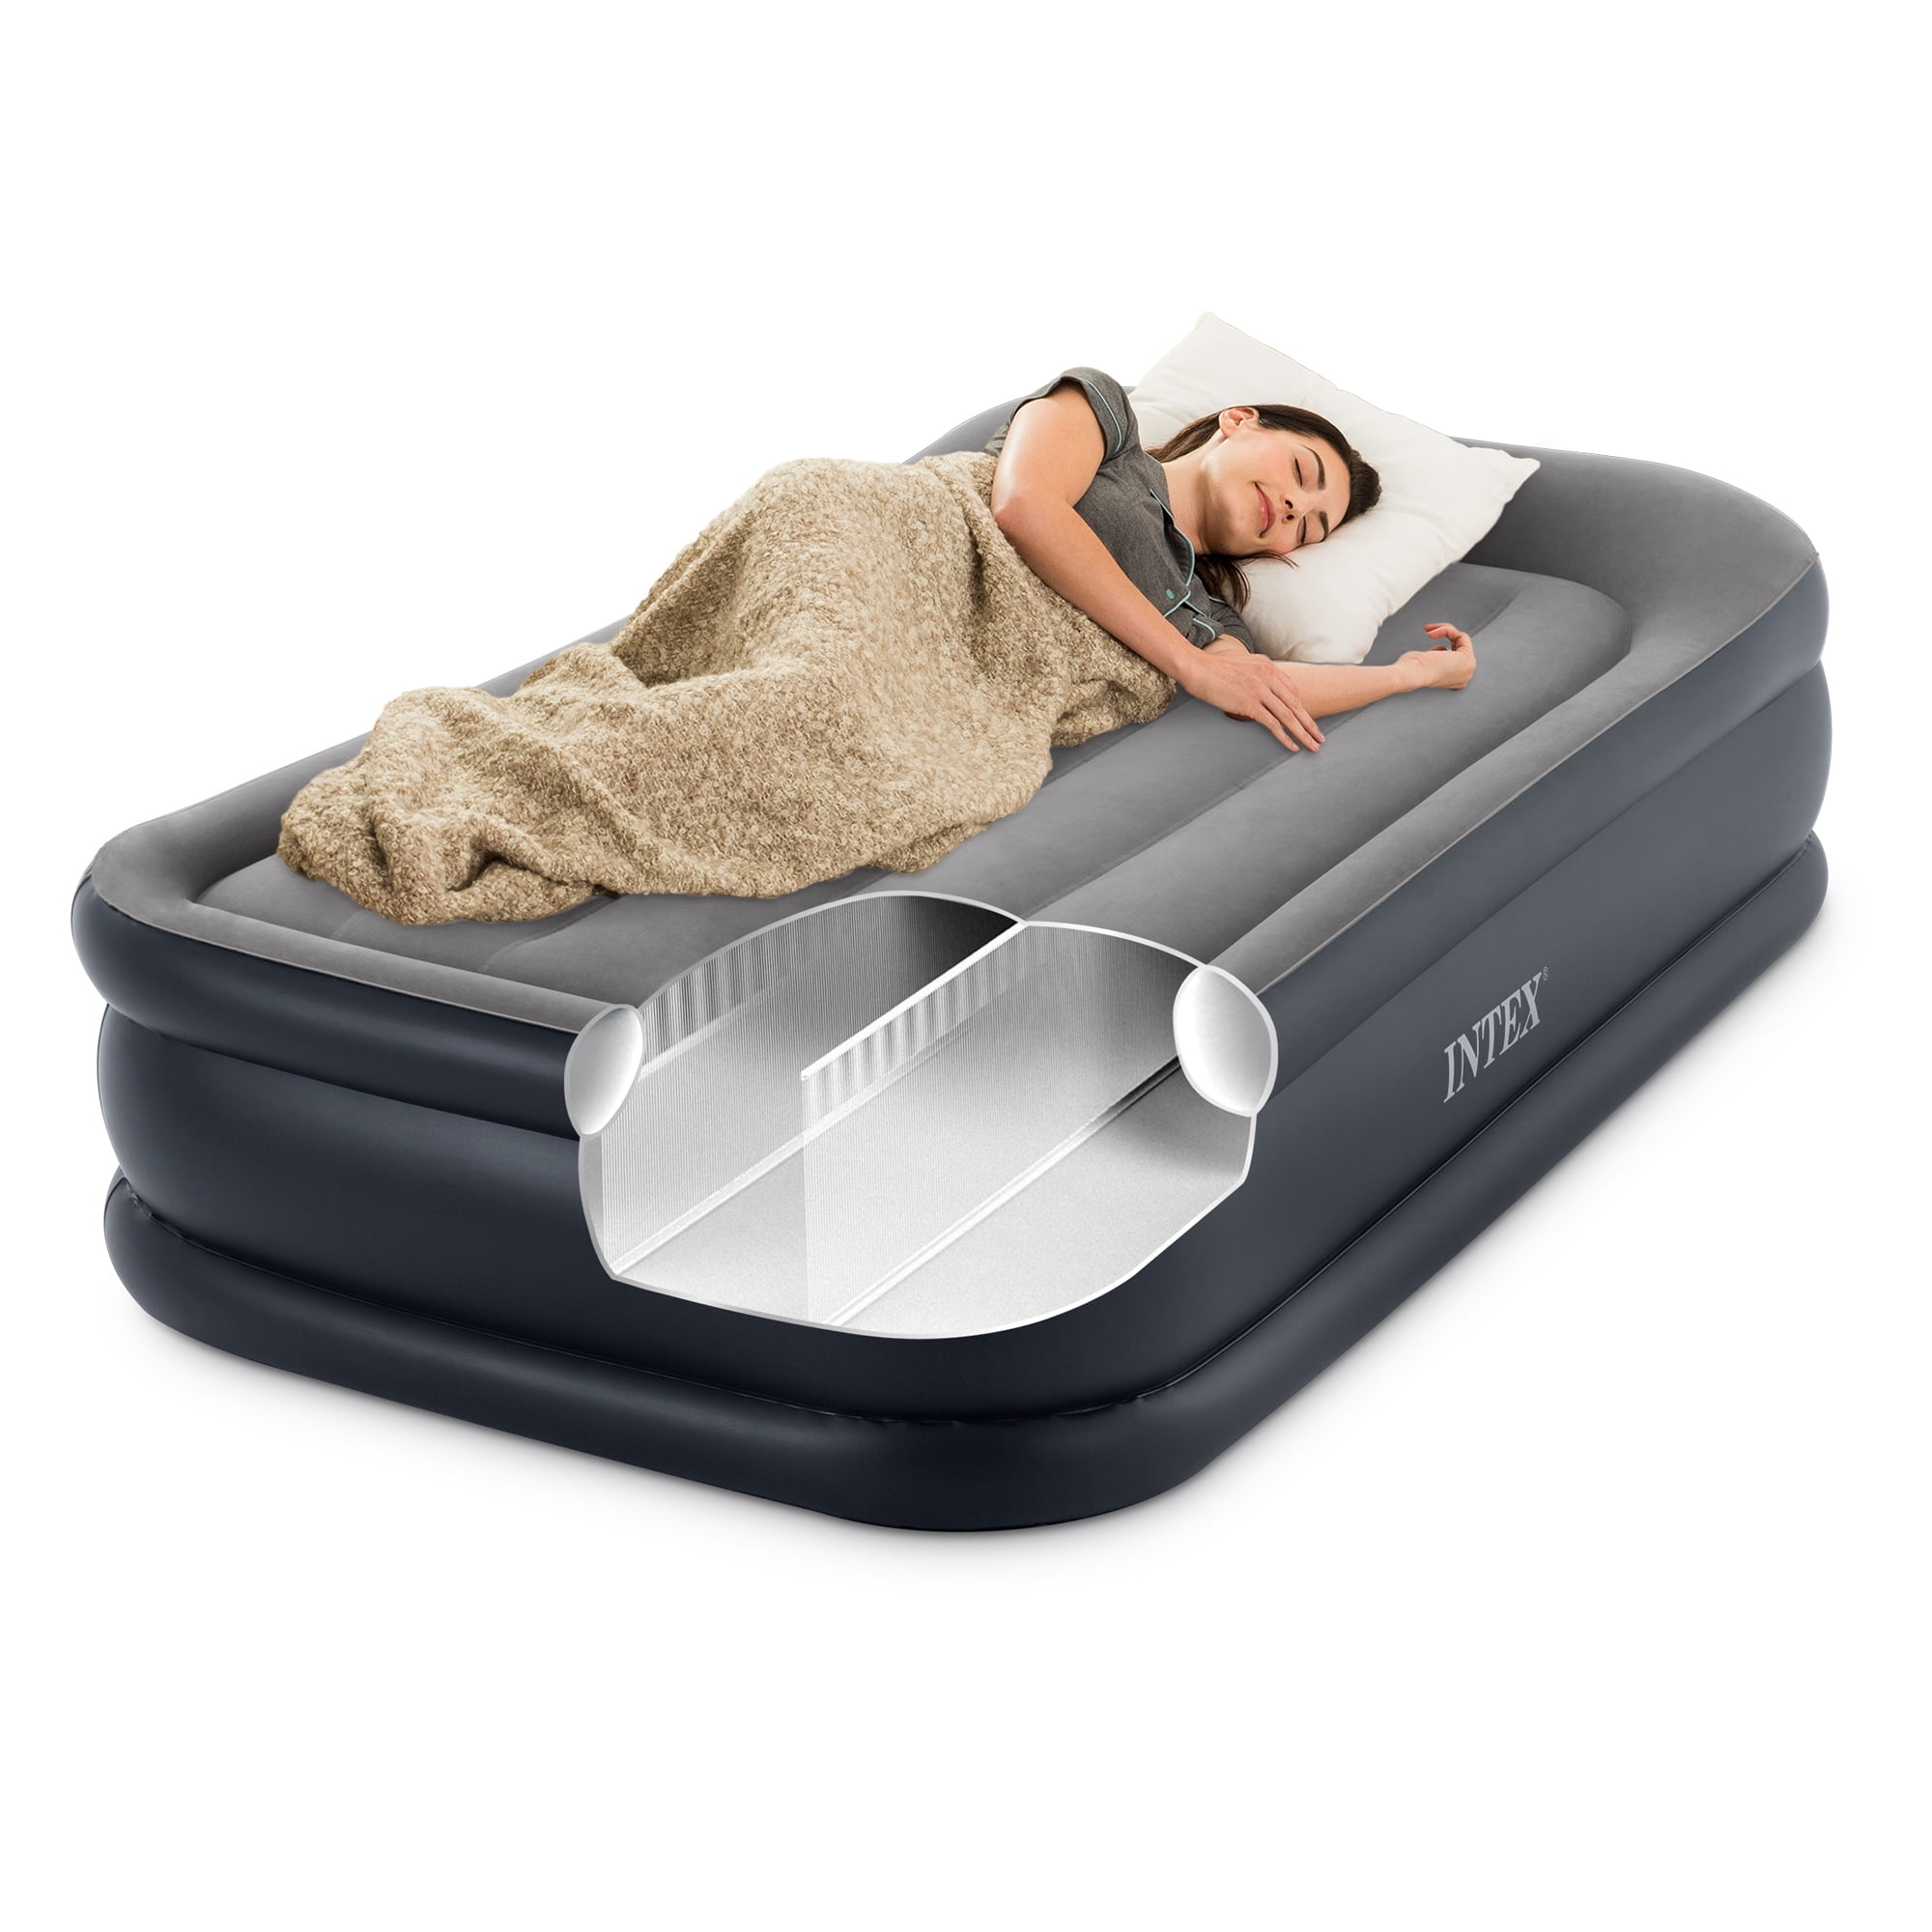 2020 Model Intex Pillow Dura-Beam Series Rest Raised Airbed with Internal Pump 